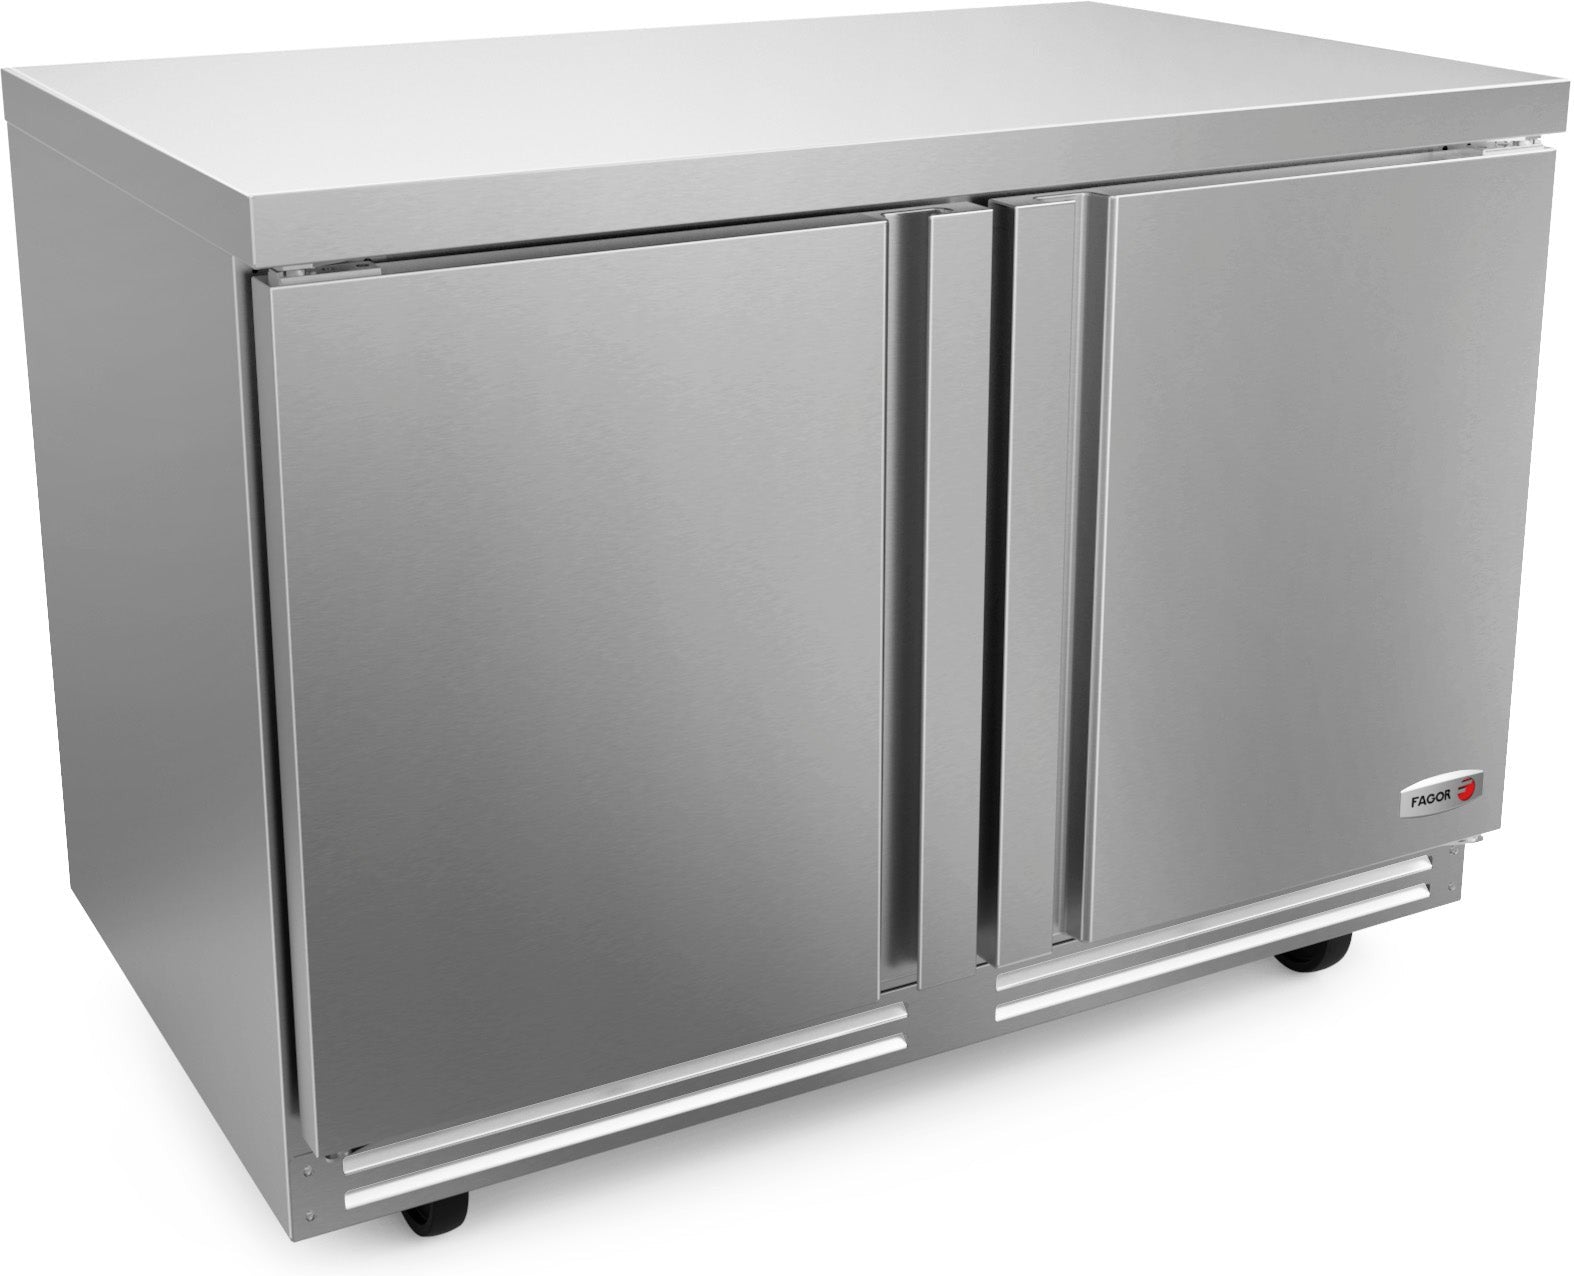 Fagor - FUR Series 115 V, 48" Double Door Undercounter Refrigerator - FUR-48-N